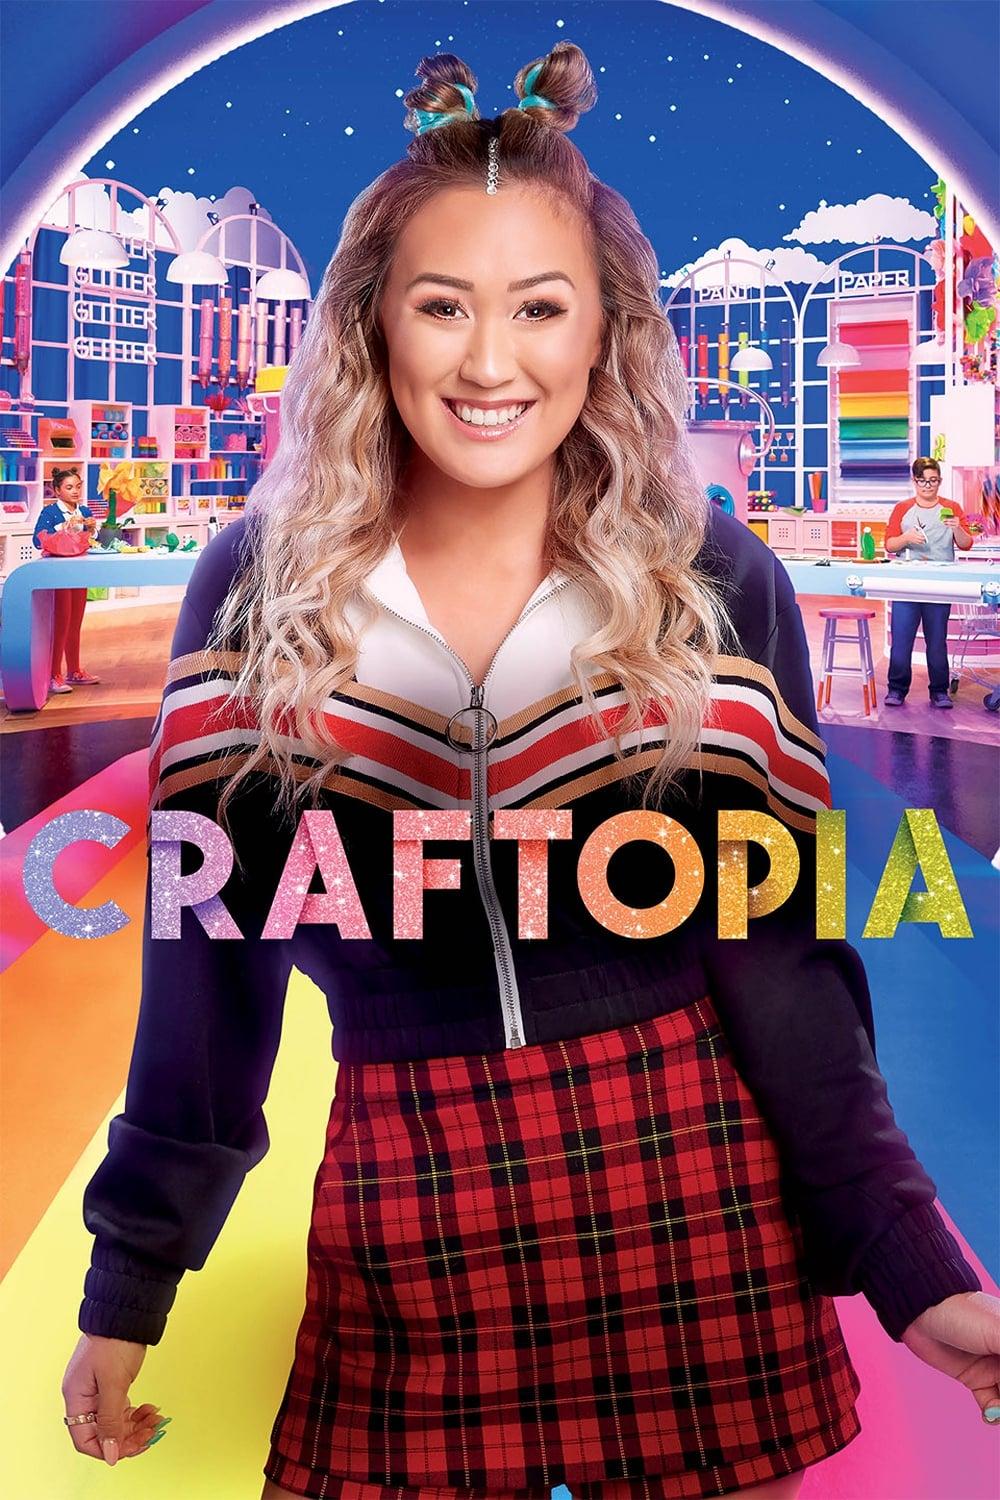 Craftopia poster